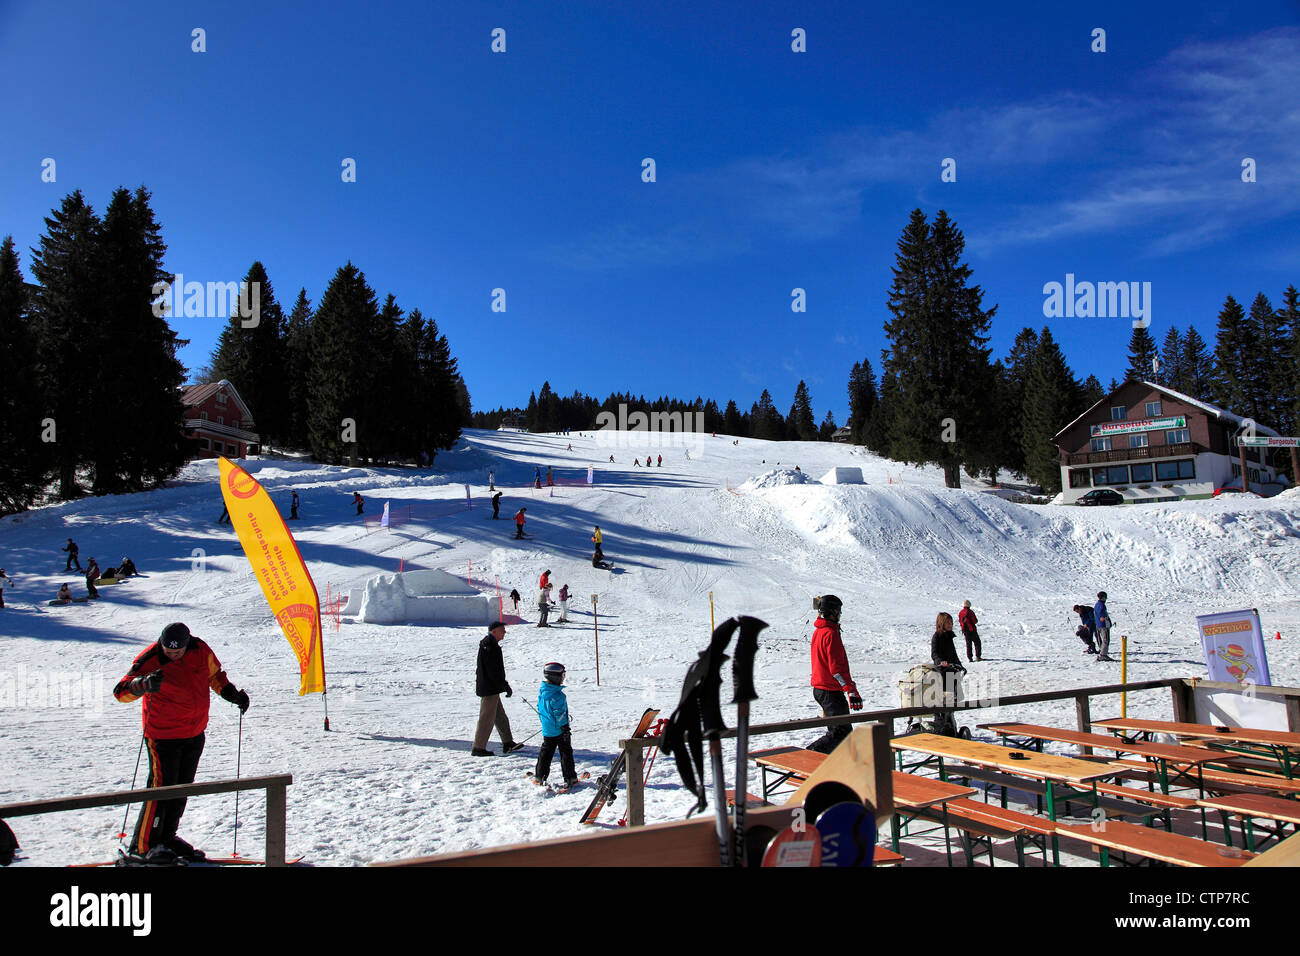 skiers on the slopes, Feldberg ski resort, Schwarzwald, Black Forest, Germany, Europe Stock Photo